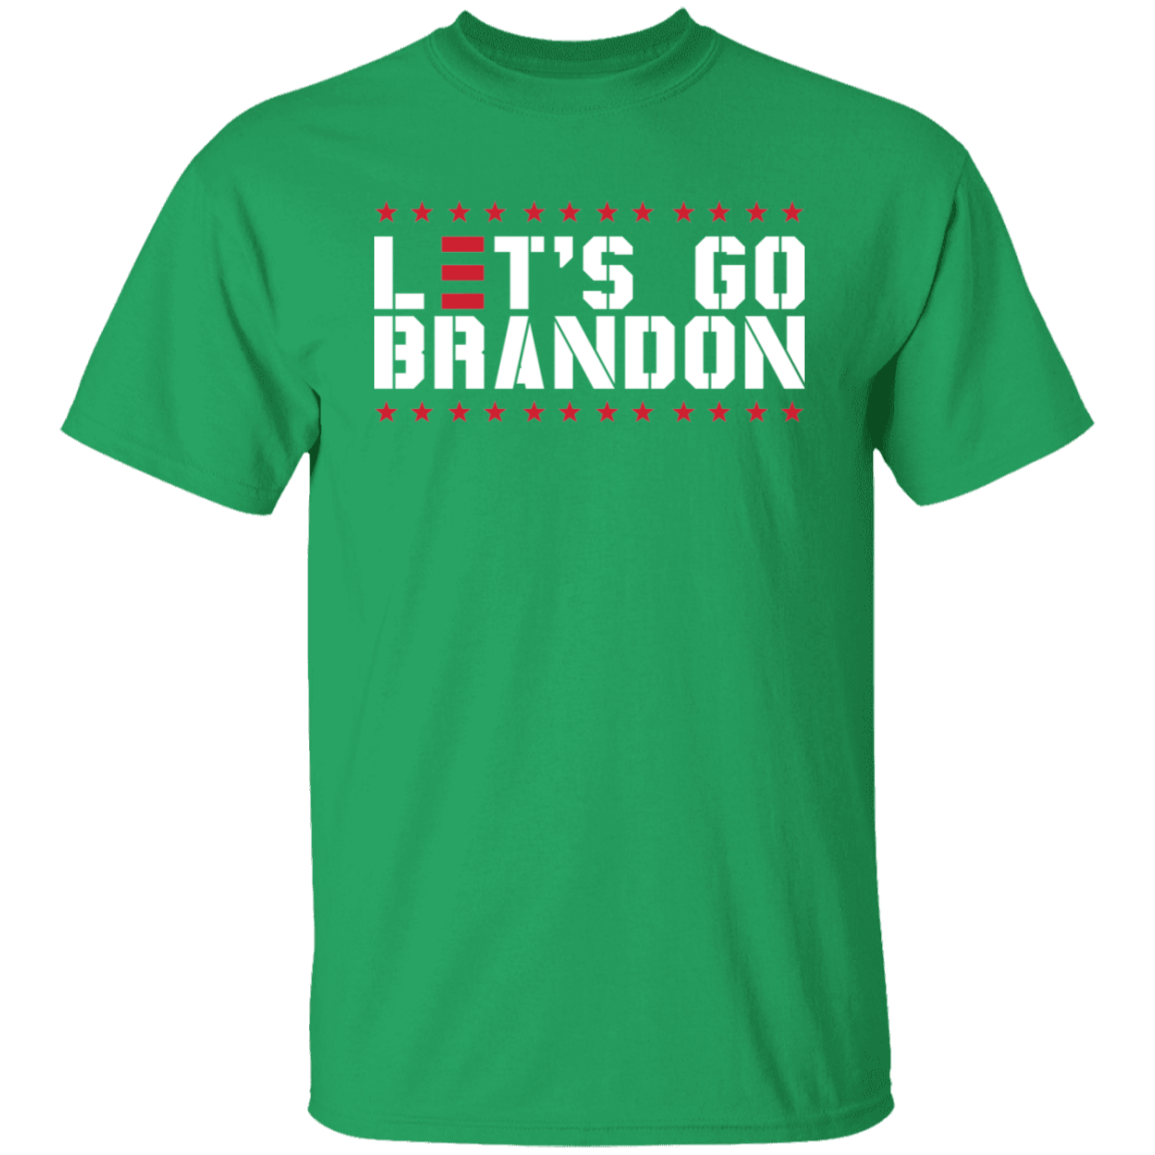 Let's Go Brandon Clothing, Lets Go Brandon Shirts